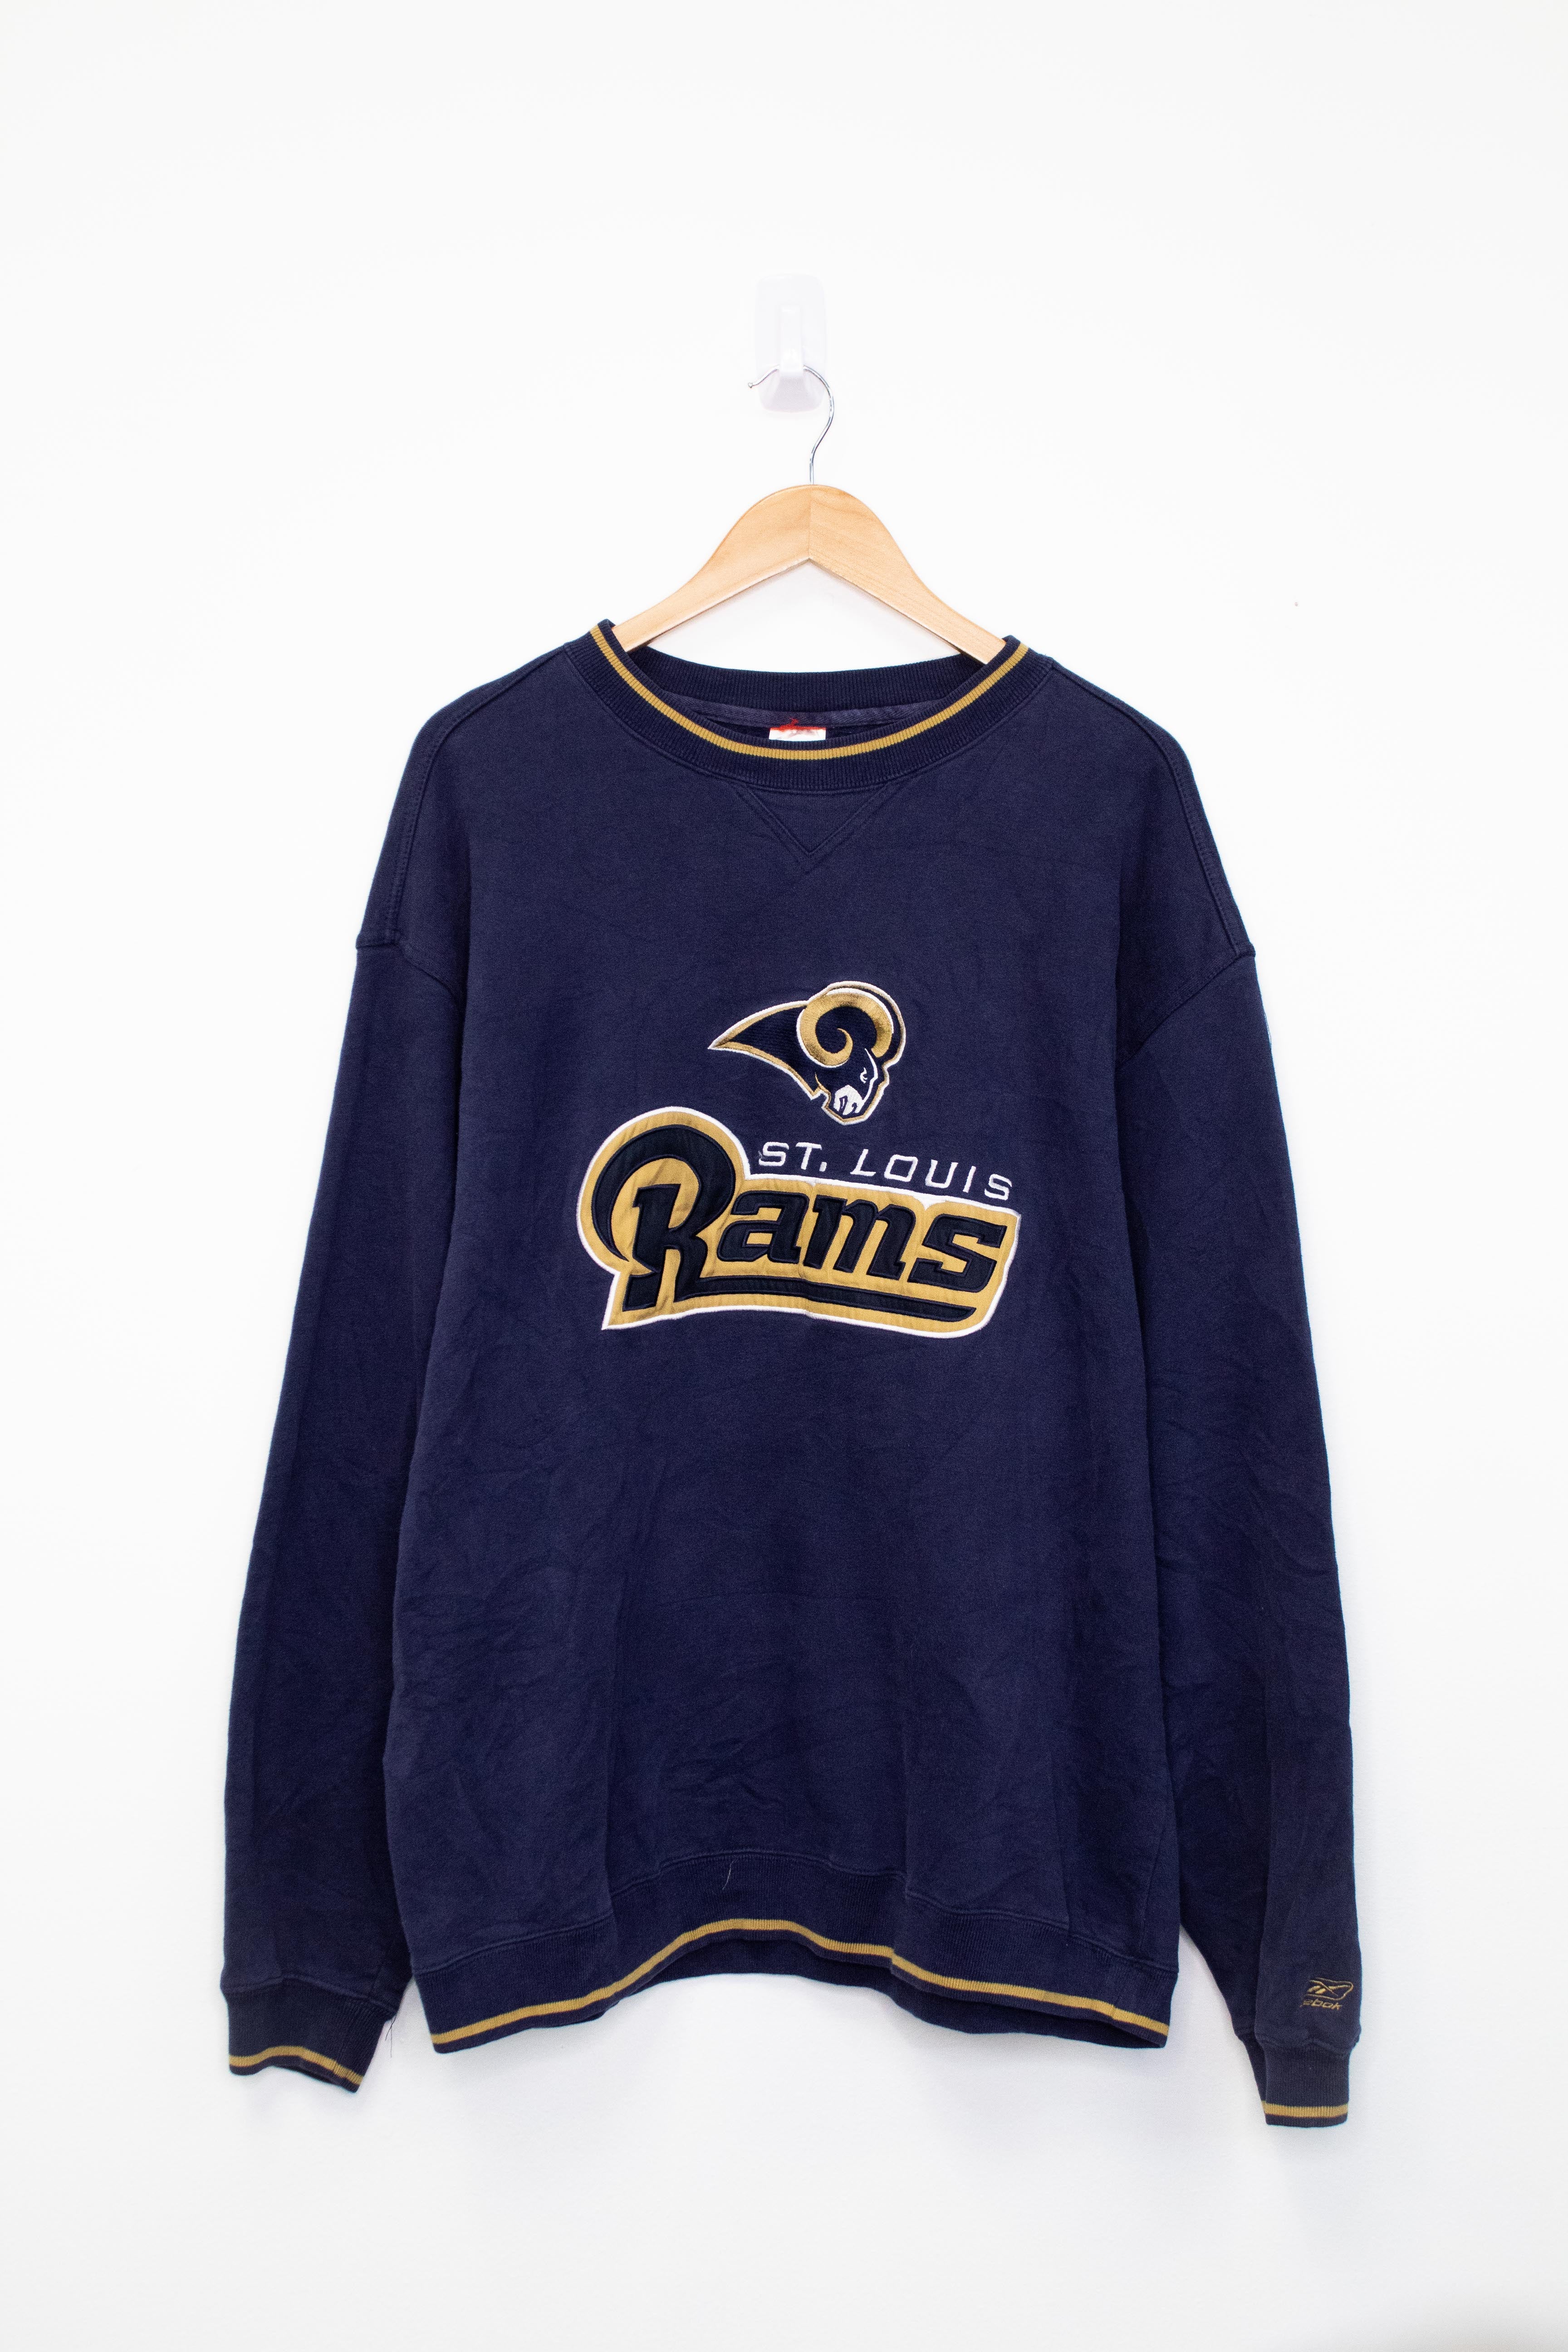 Vintage St Louis Rams Crew